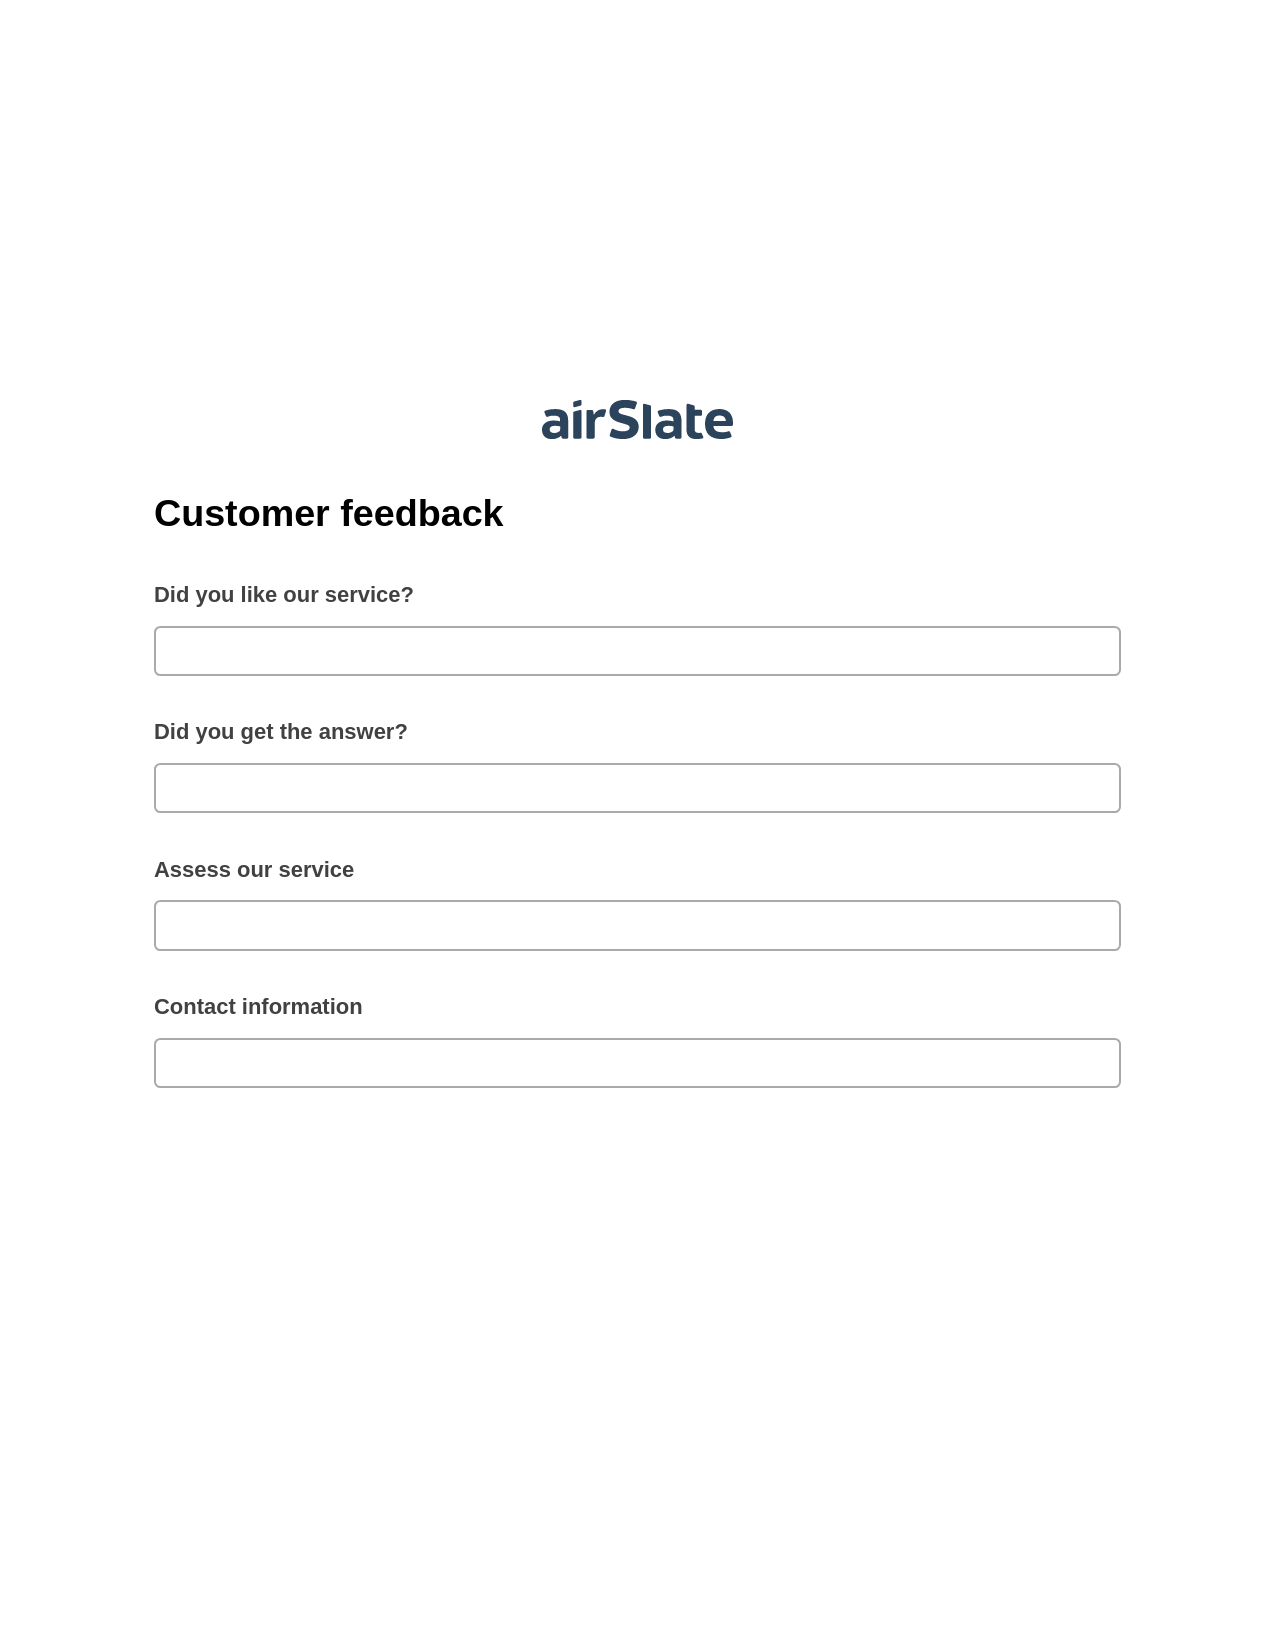 Multirole Customer feedback Pre-fill from Smartsheet Bot, Invoke Salesforce Process Bot, Archive to SharePoint Folder Bot